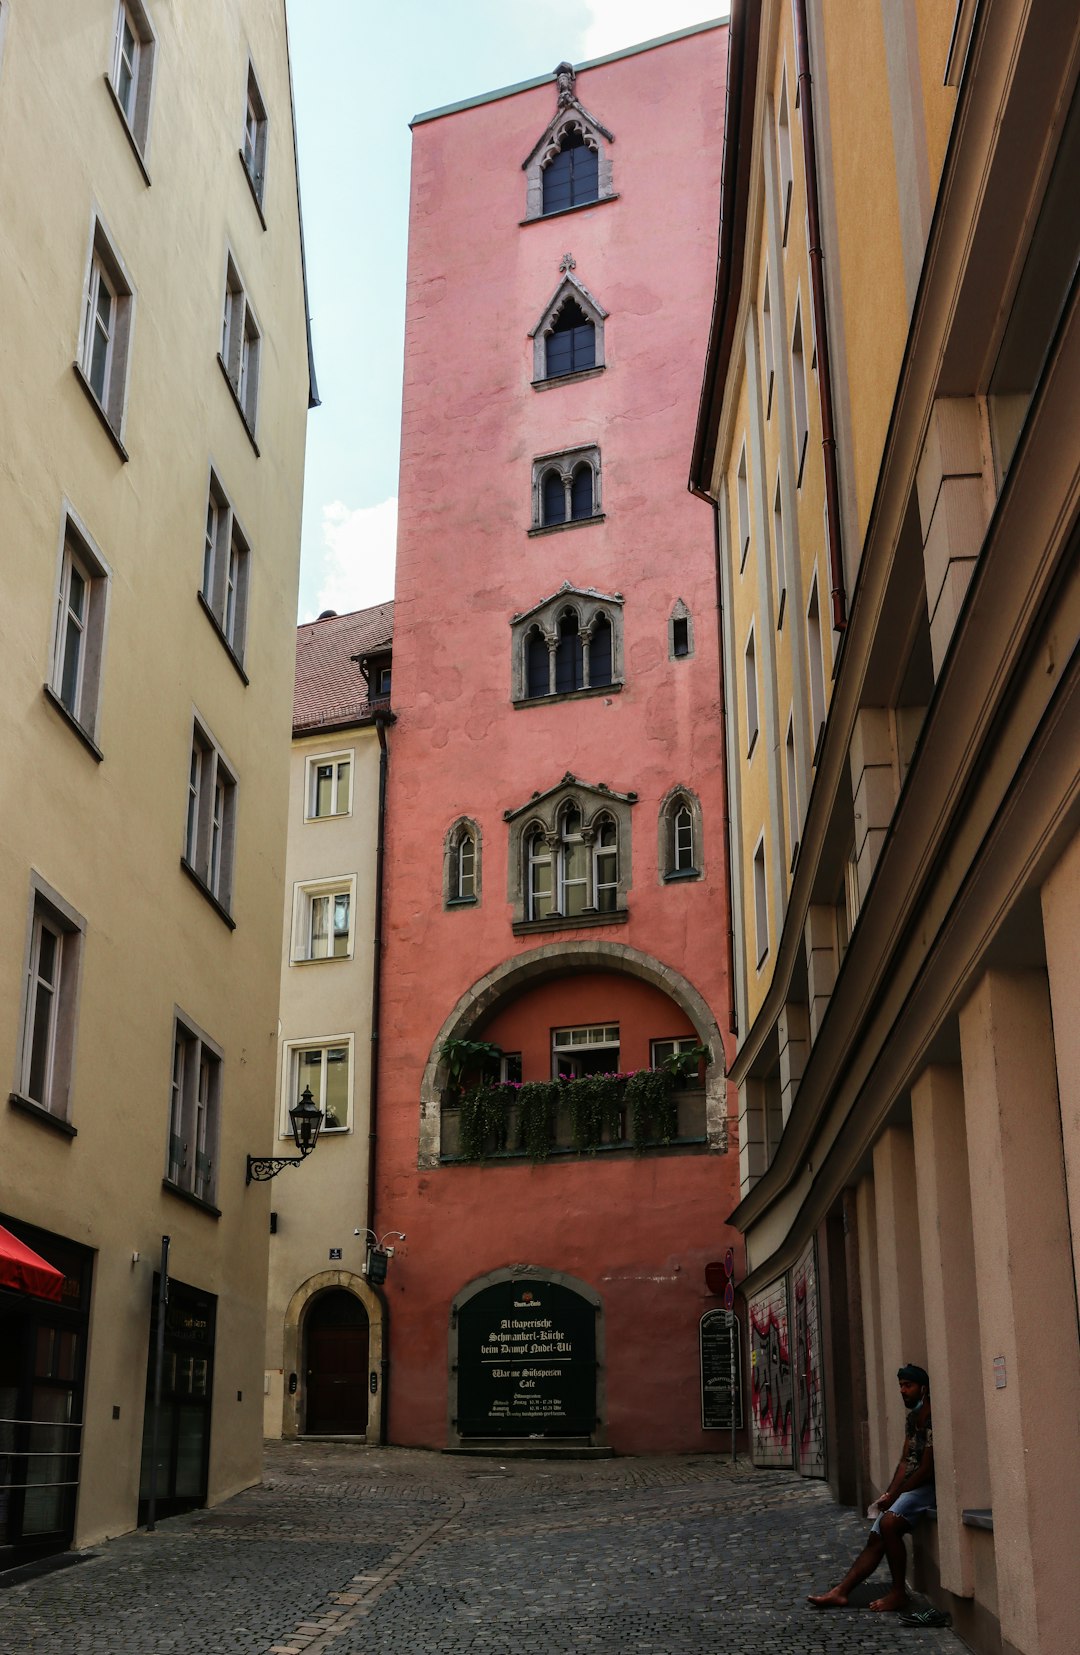 Town photo spot Regensburg Nuremberg